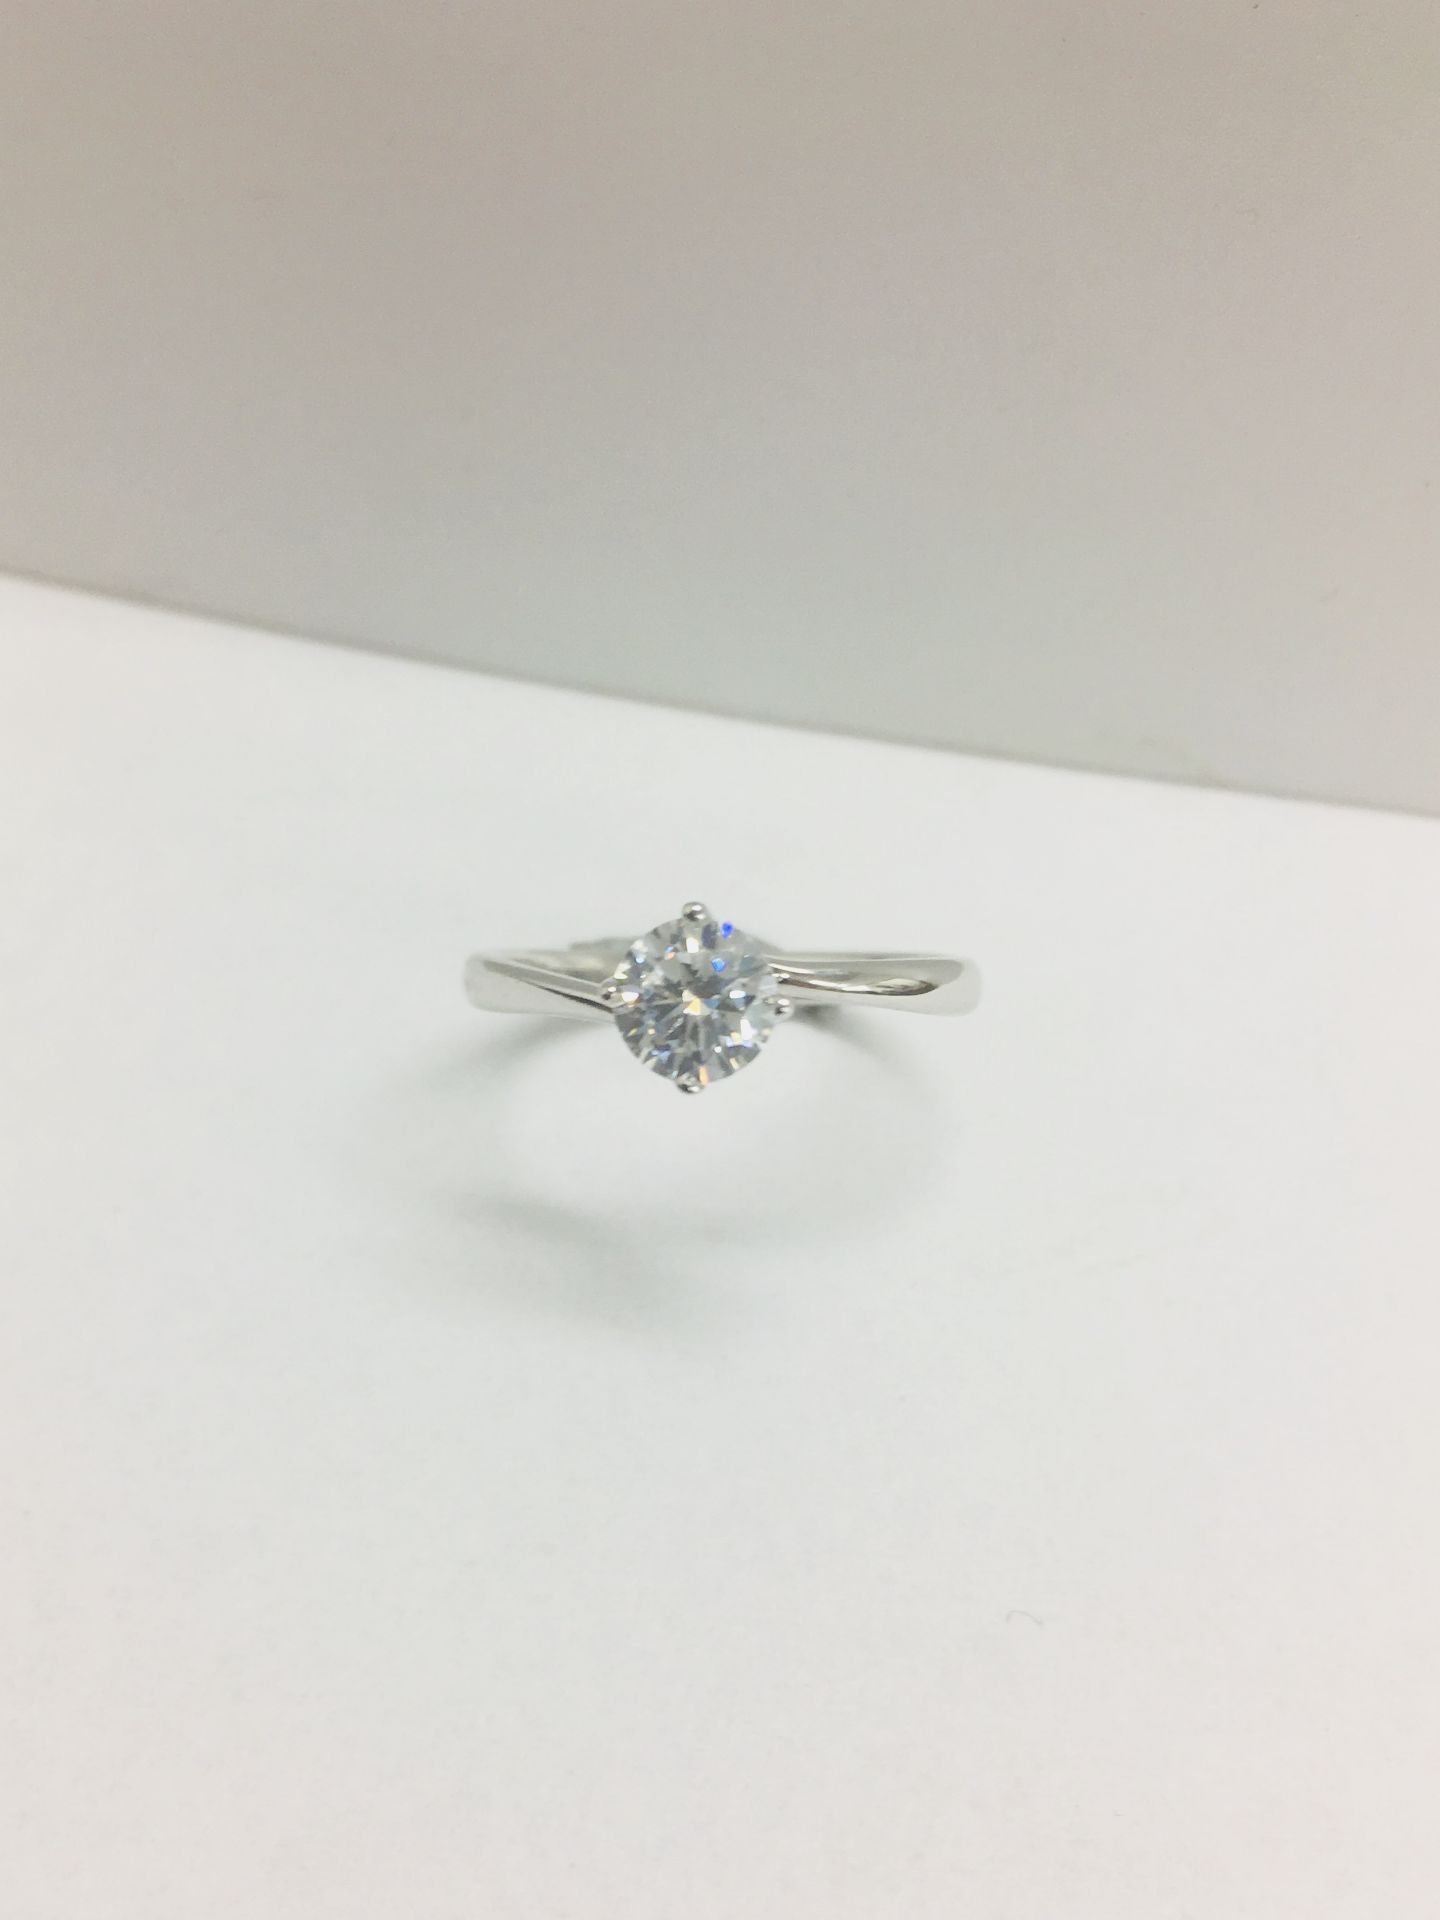 Platinum diamond twist style solitaire ring,0.50ct diamond D colour vs clarity,3.28gms platinum - Image 5 of 5